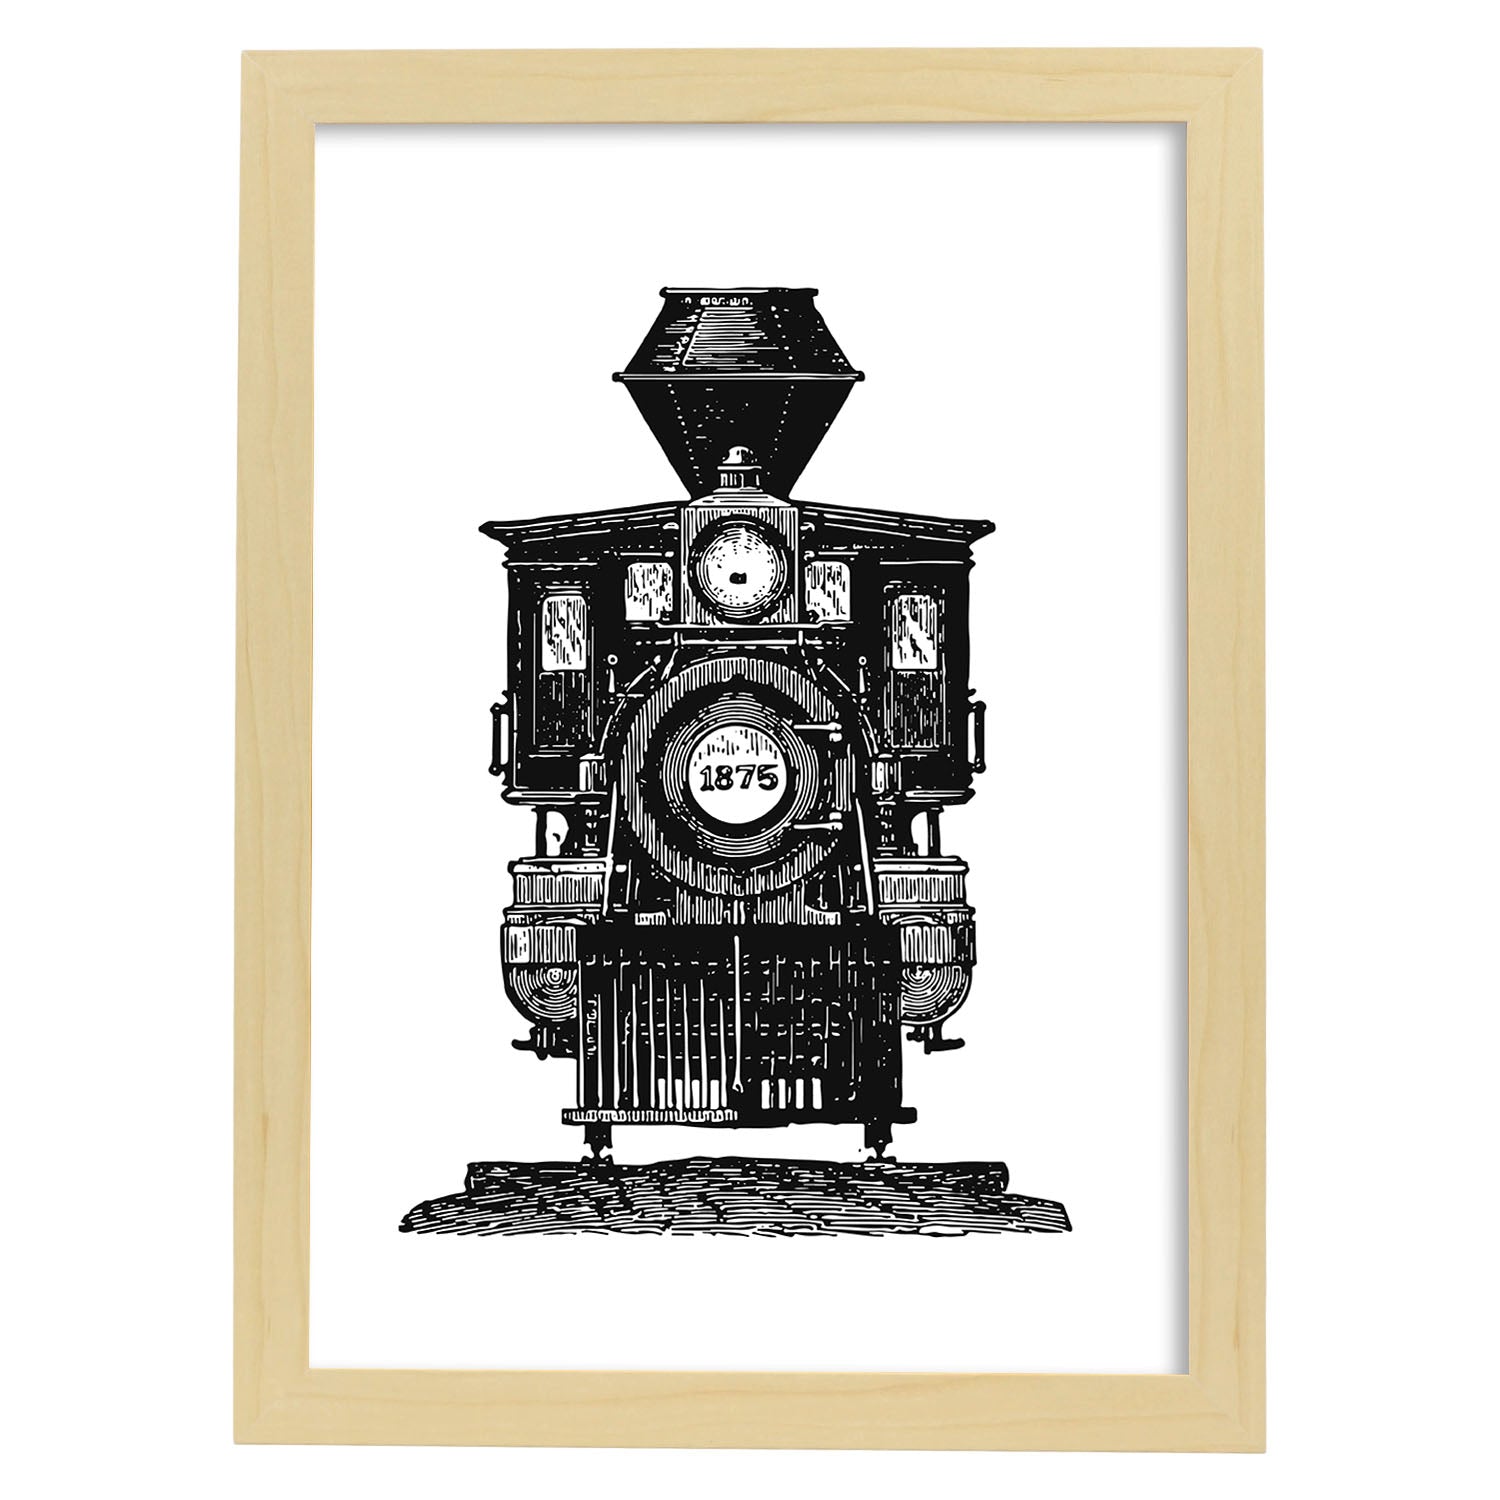 Lámina de Tren a vapor. Posters con objetos vintage.-Artwork-Nacnic-A4-Marco Madera clara-Nacnic Estudio SL